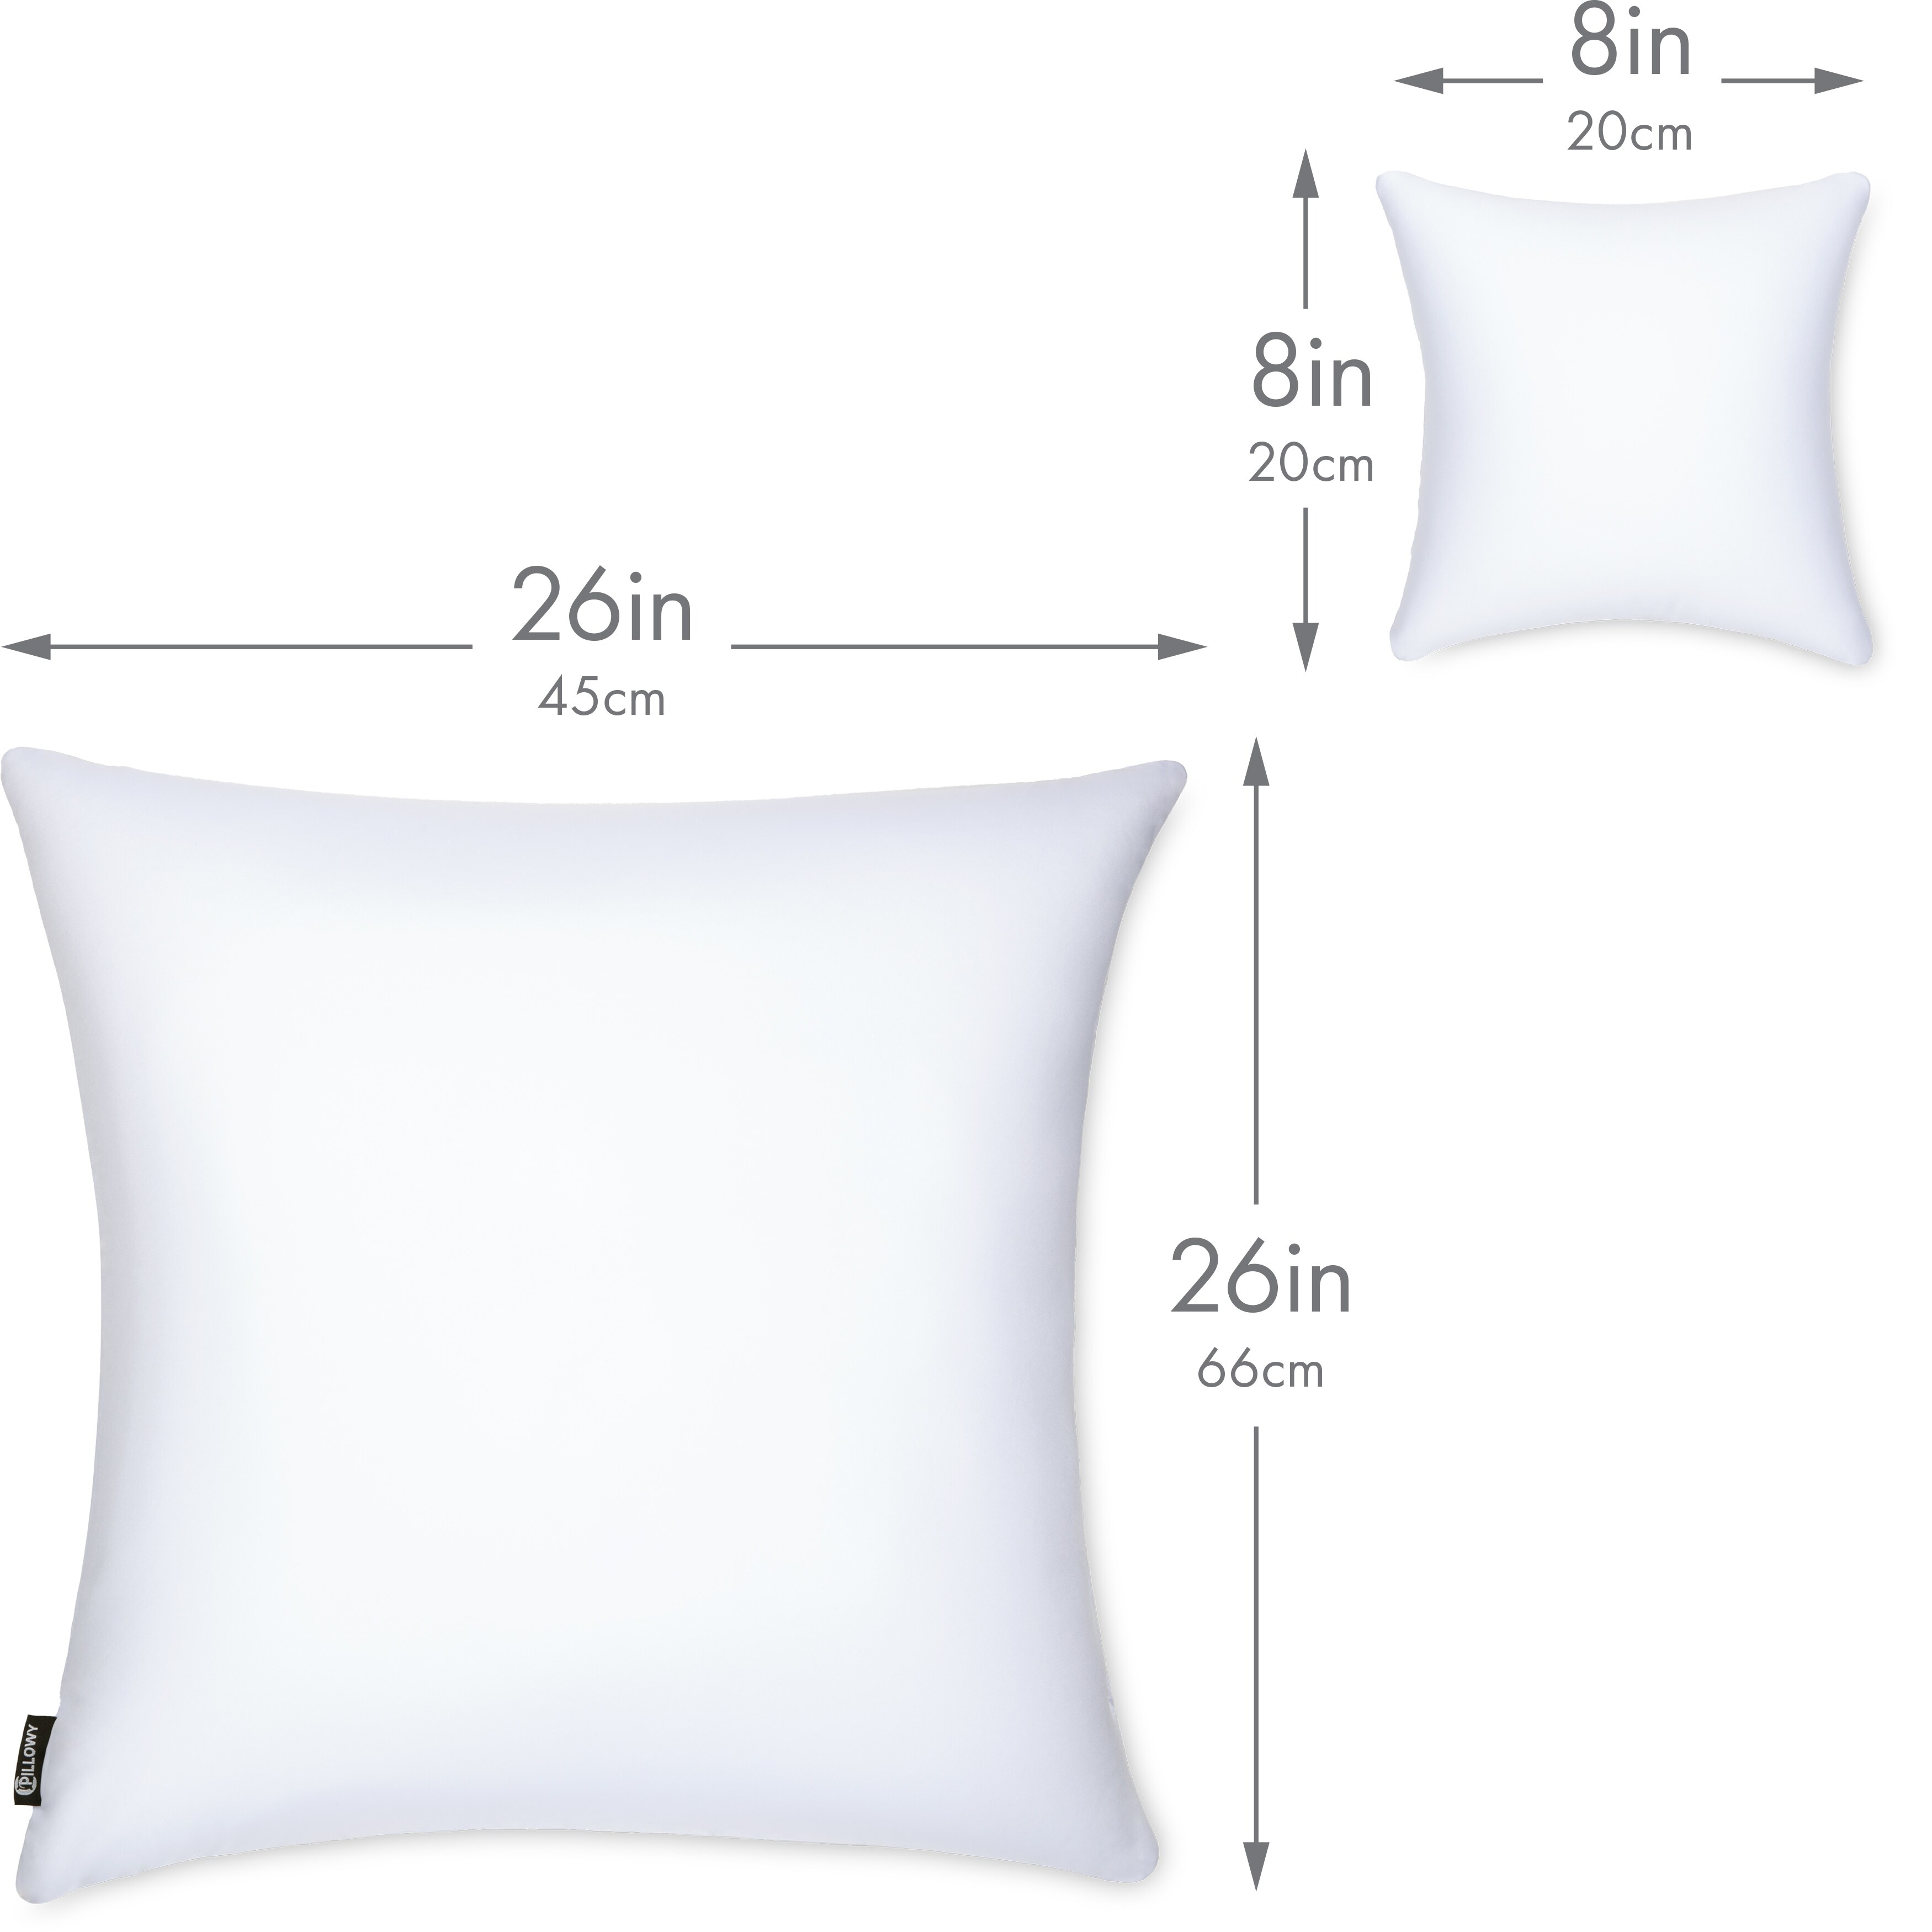 45cm Square Cushion Insert